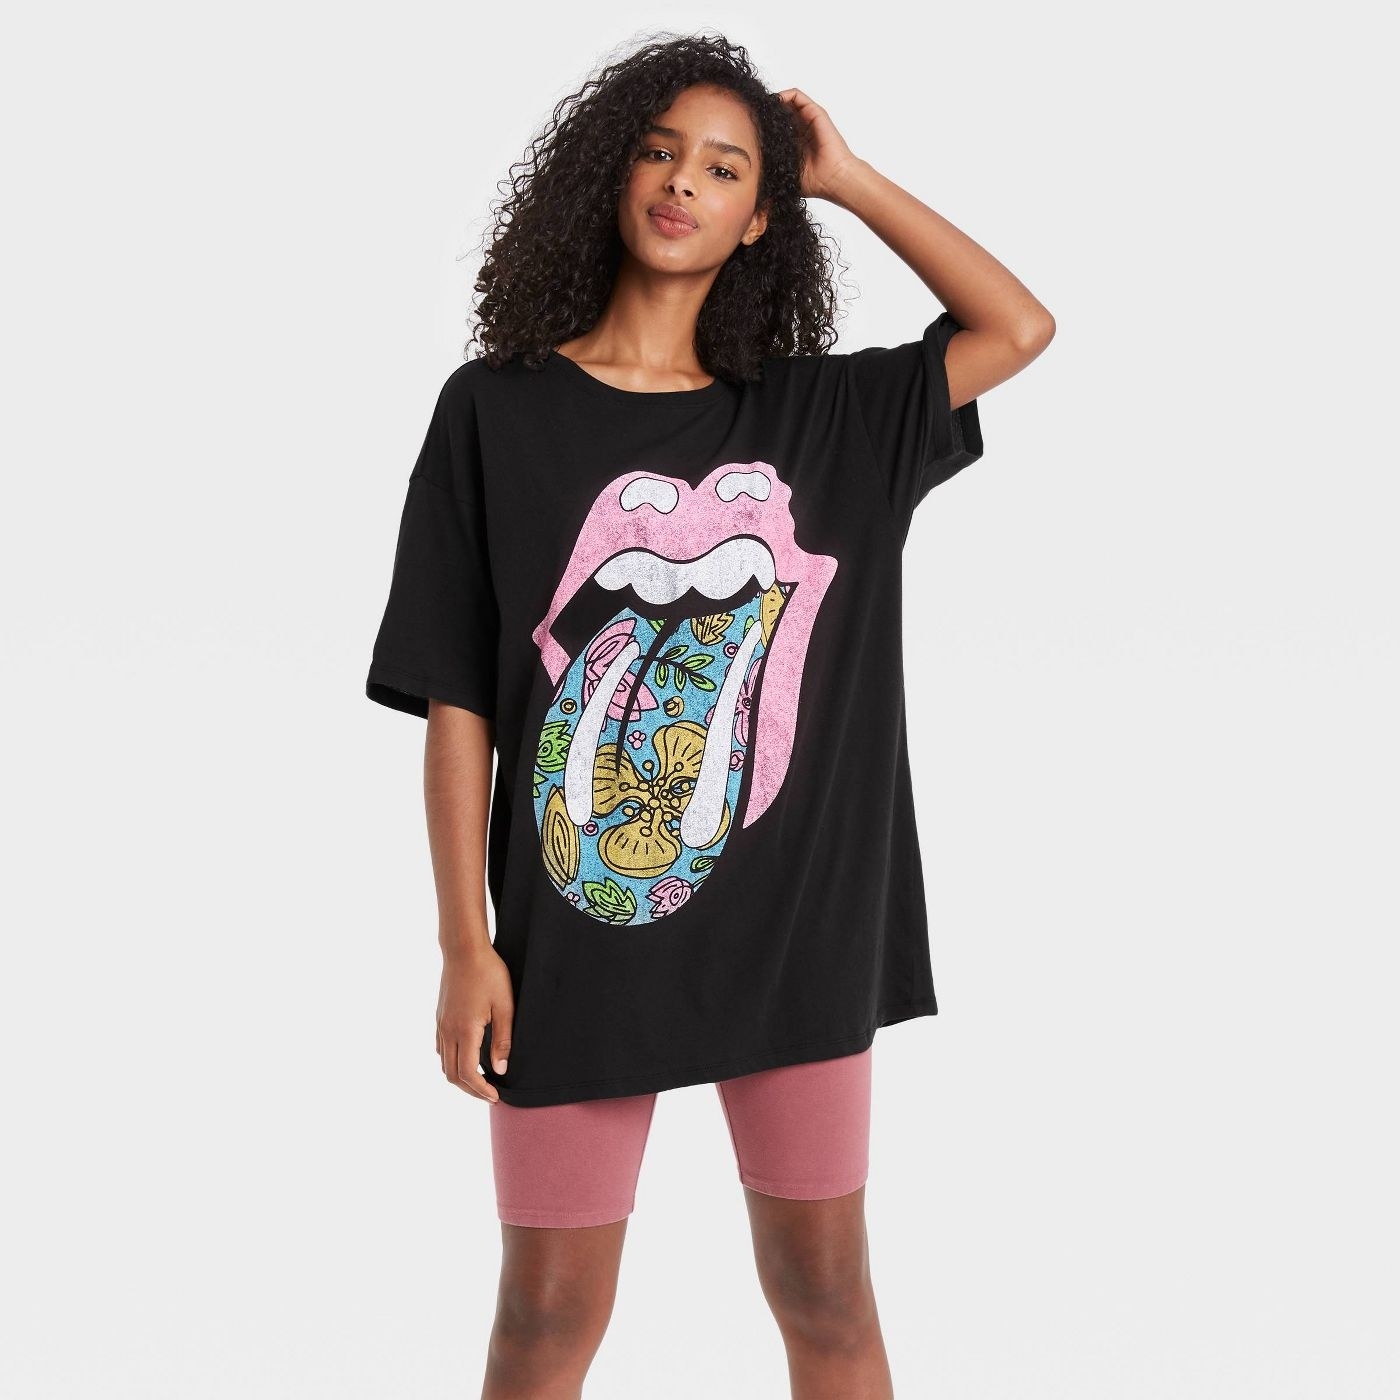 A model wearing a Rolling Stones t shirt dress